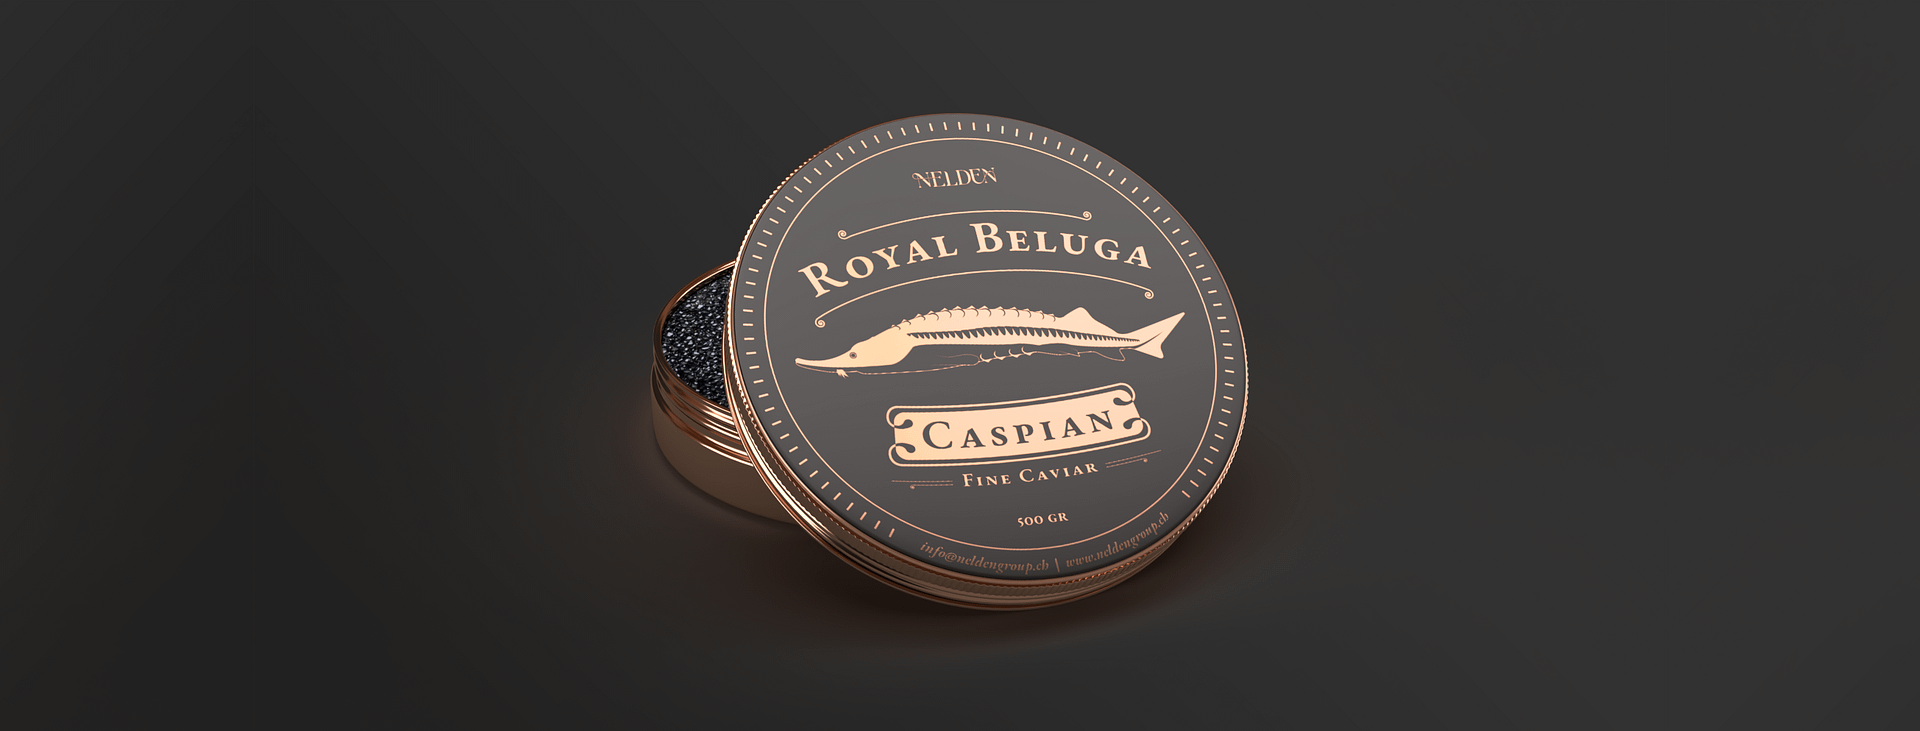 Nelden: Package Design for Royal Beluga Caspian Fine Caviar.